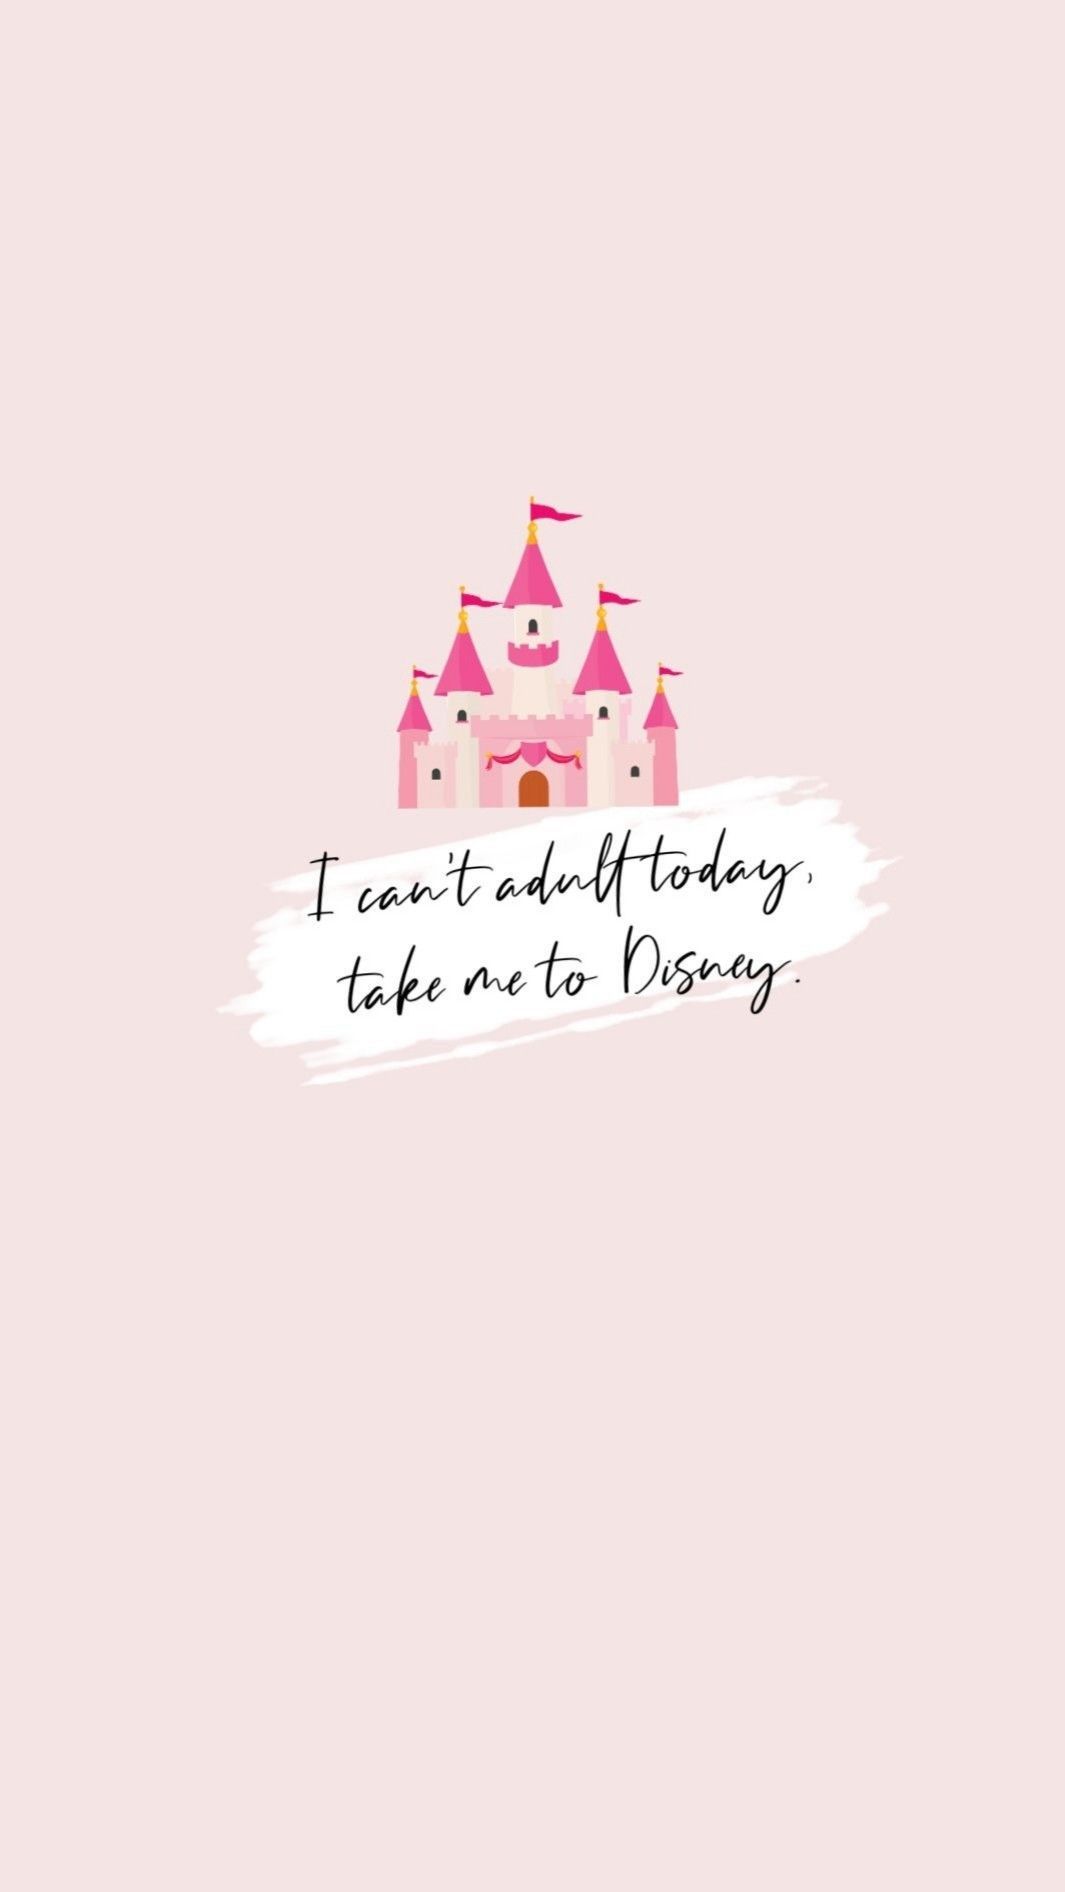 Disney princess quotes and sayings